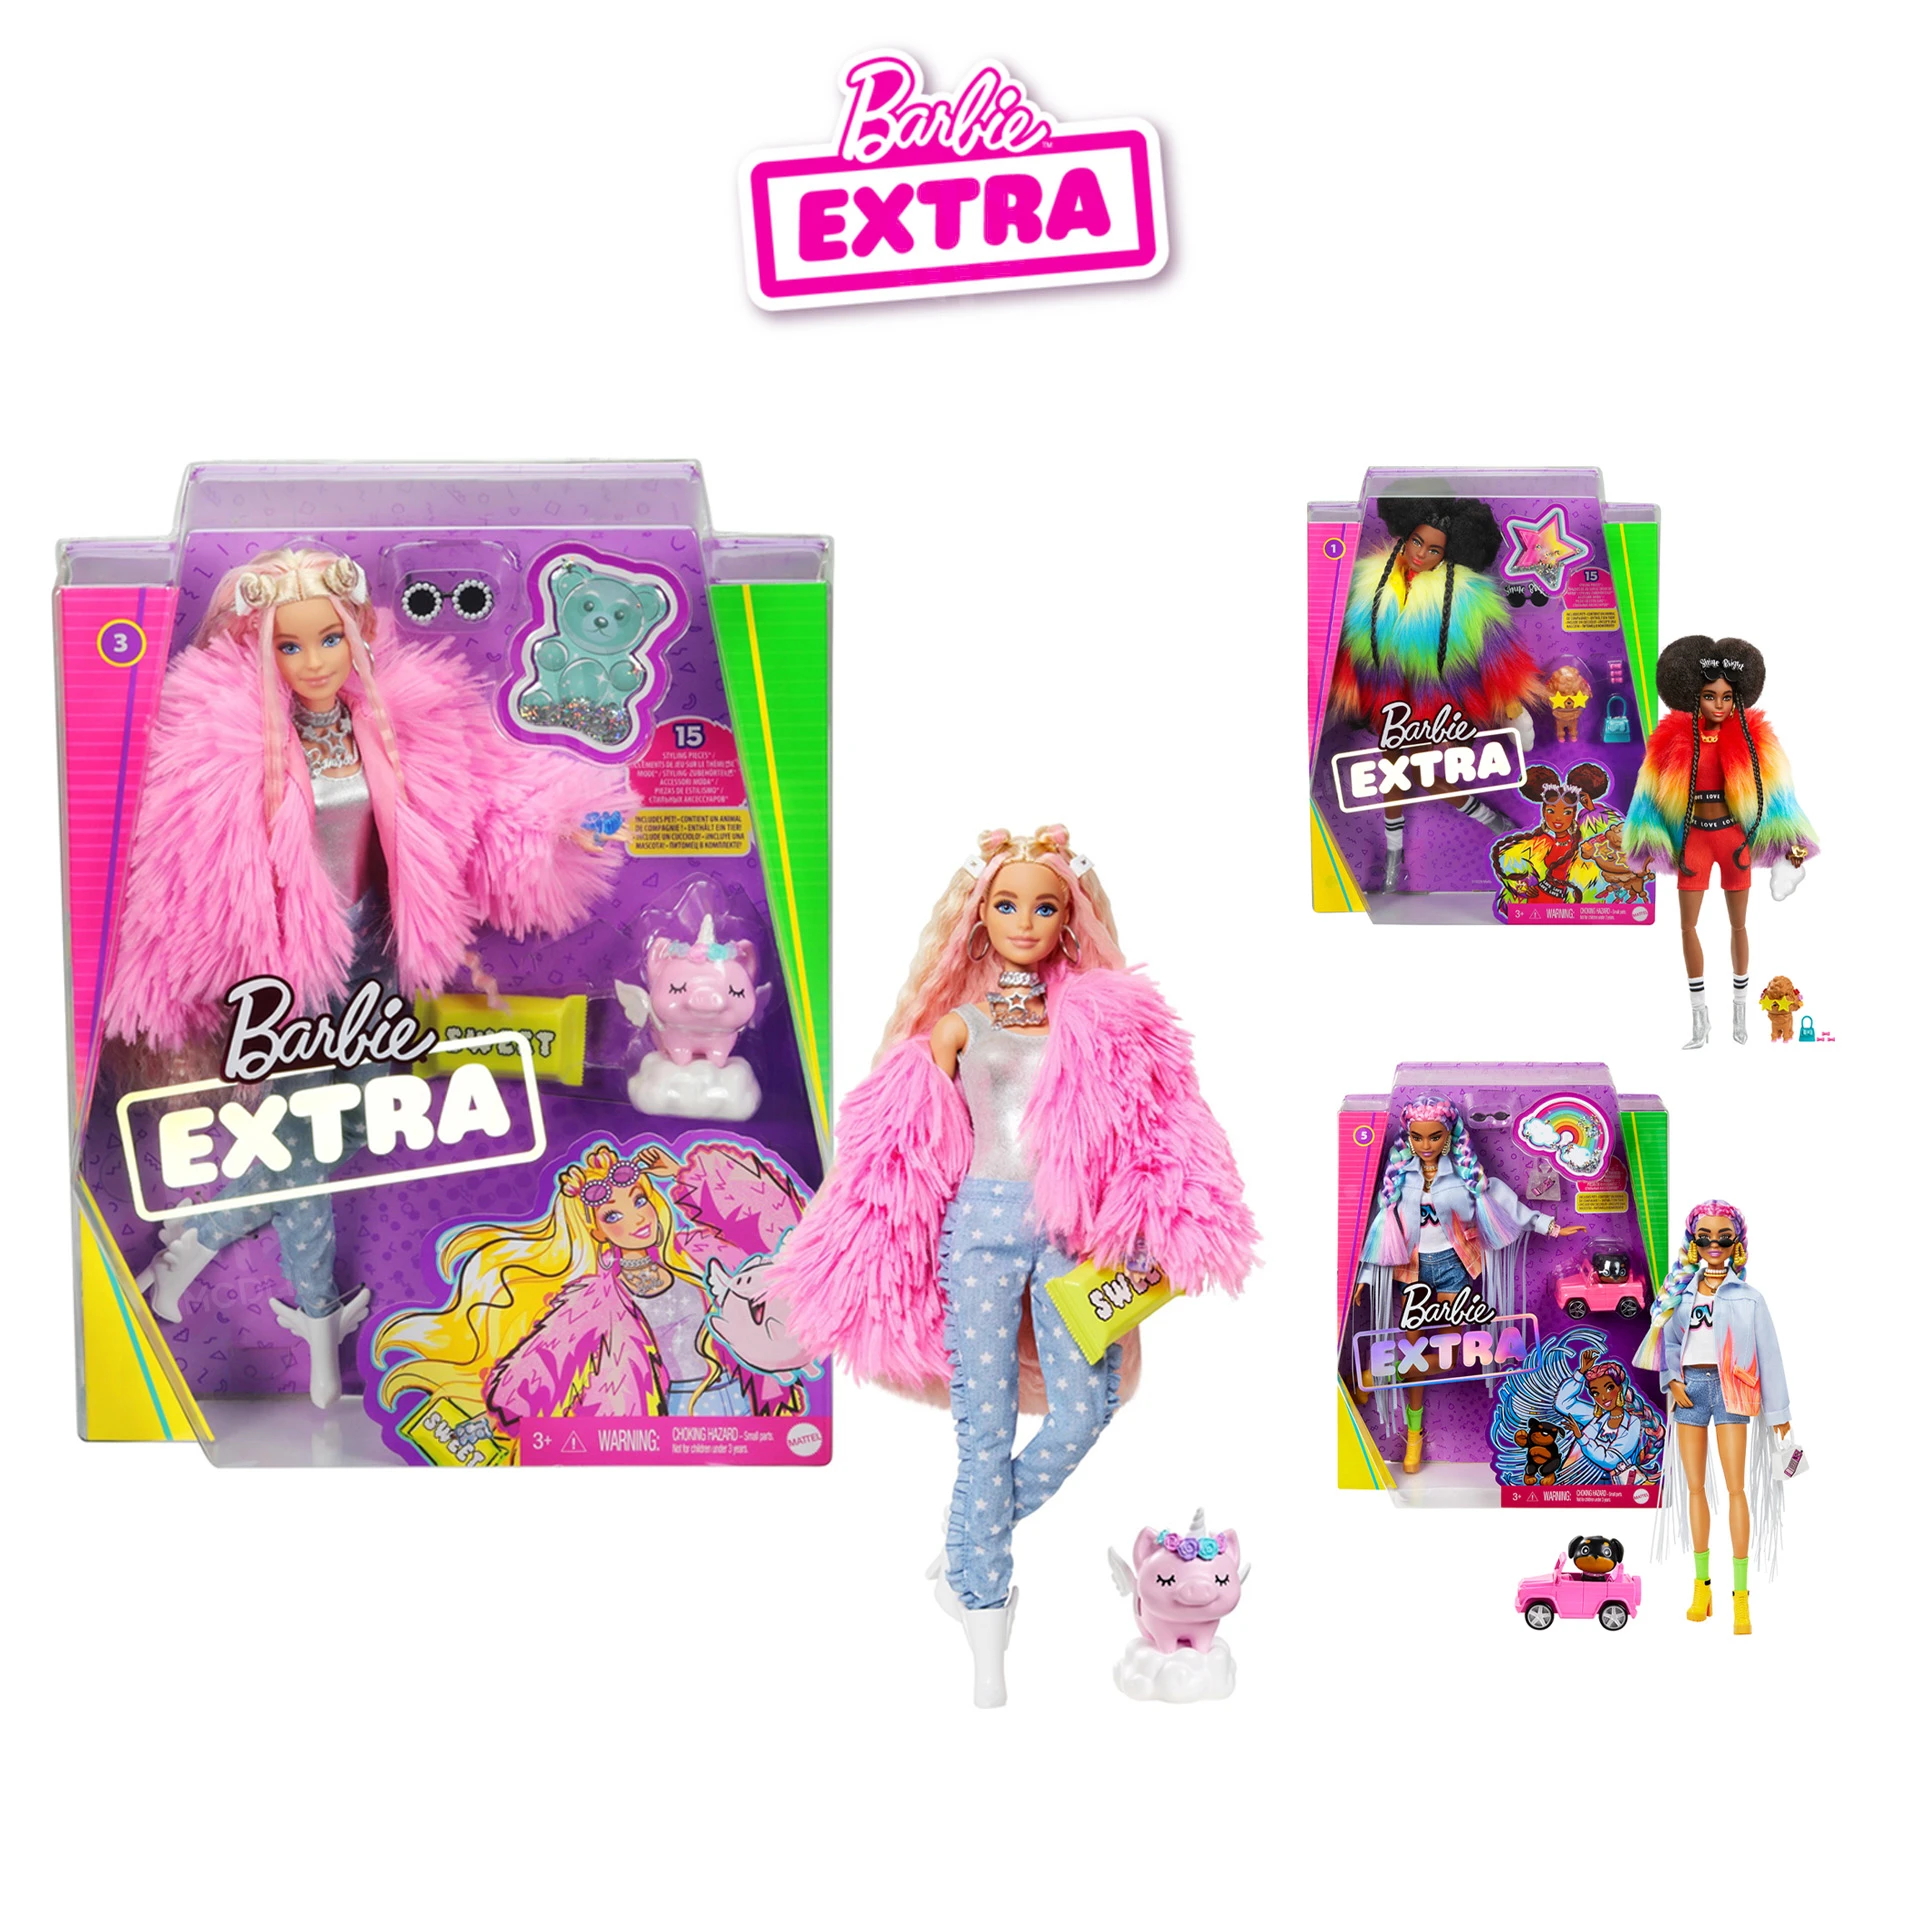 Onaangenaam Artefact Over instelling Original Barbie Extra Dolls Blonde Rainbow Brunette Hair Accessories  Flexible Joints Barbie Collector Girls Kids For Toy Gift - Dolls -  AliExpress